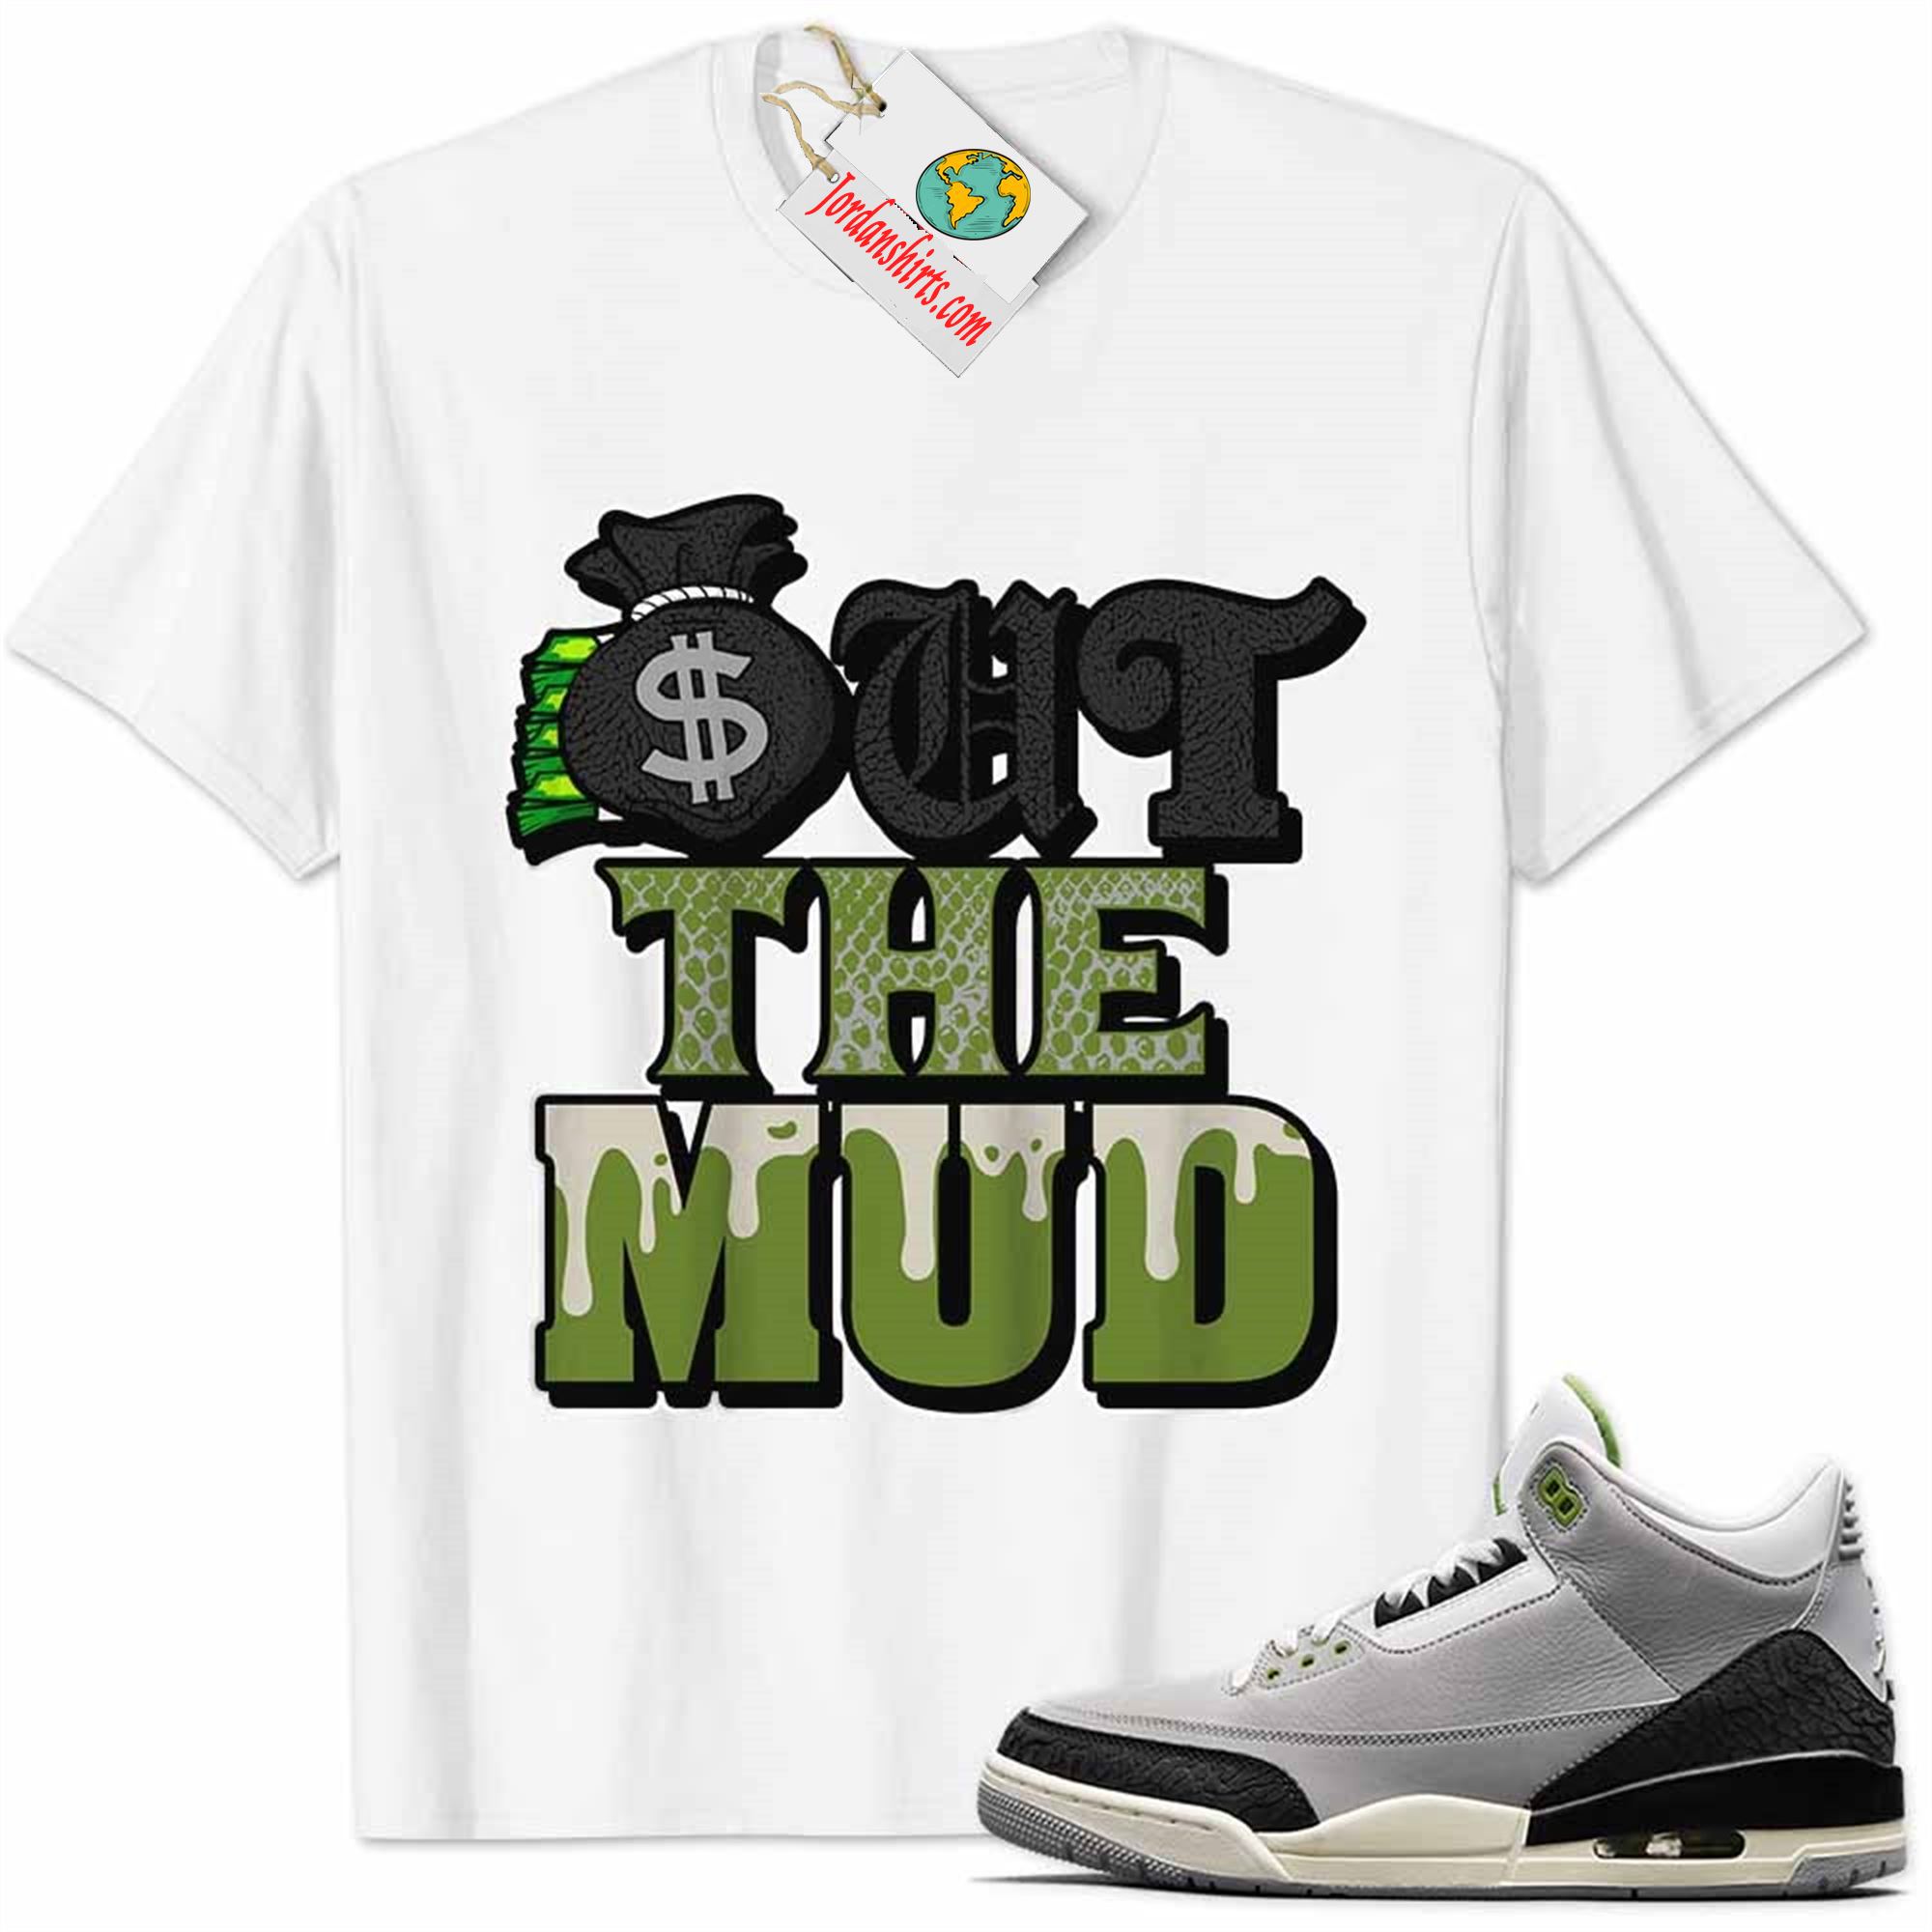 Jordan 3 Shirt, Jordan 3 Chlorophyll Shirt Out The Mud Money Bag White Size Up To 5xl